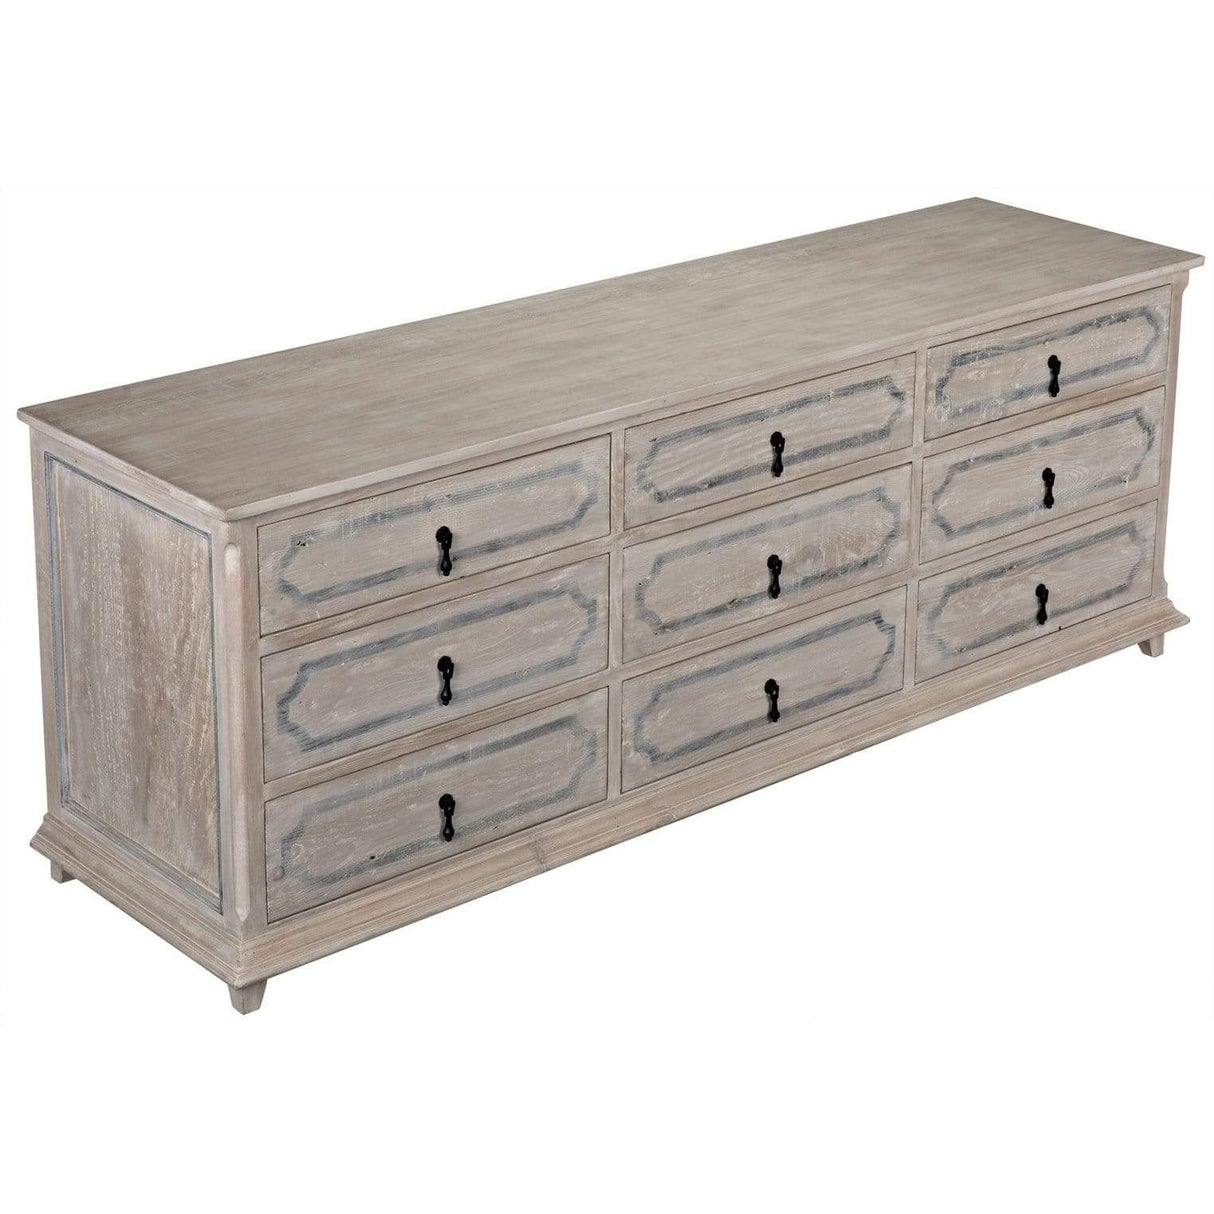 CFC Livingston 9-Drawer Dresser Furniture cfc-OW132-9